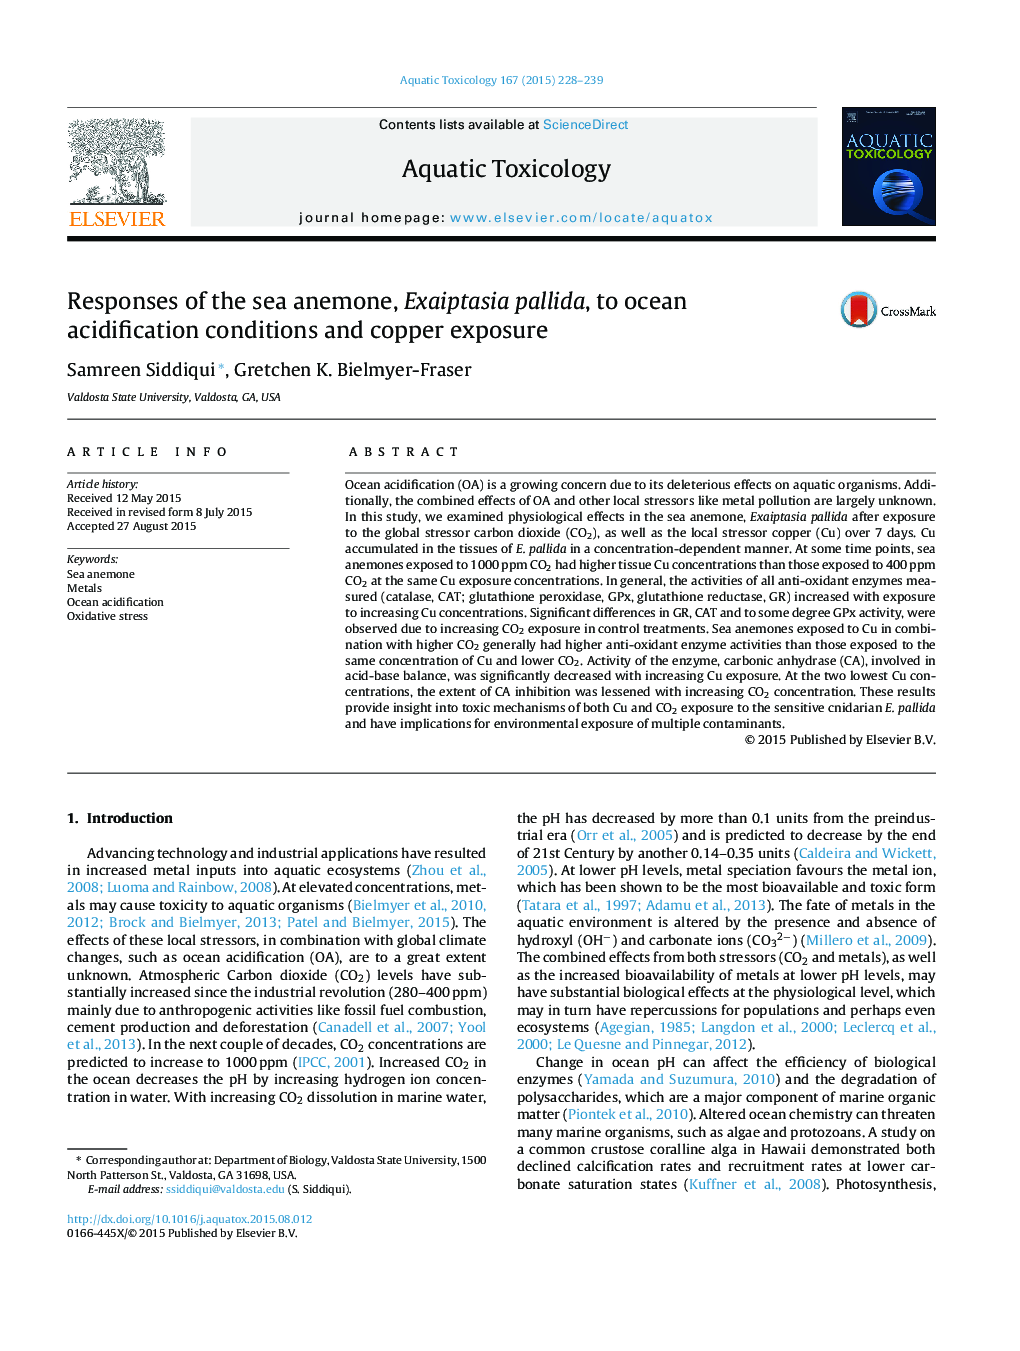 Responses of the sea anemone, Exaiptasia pallida, to ocean acidification conditions and copper exposure